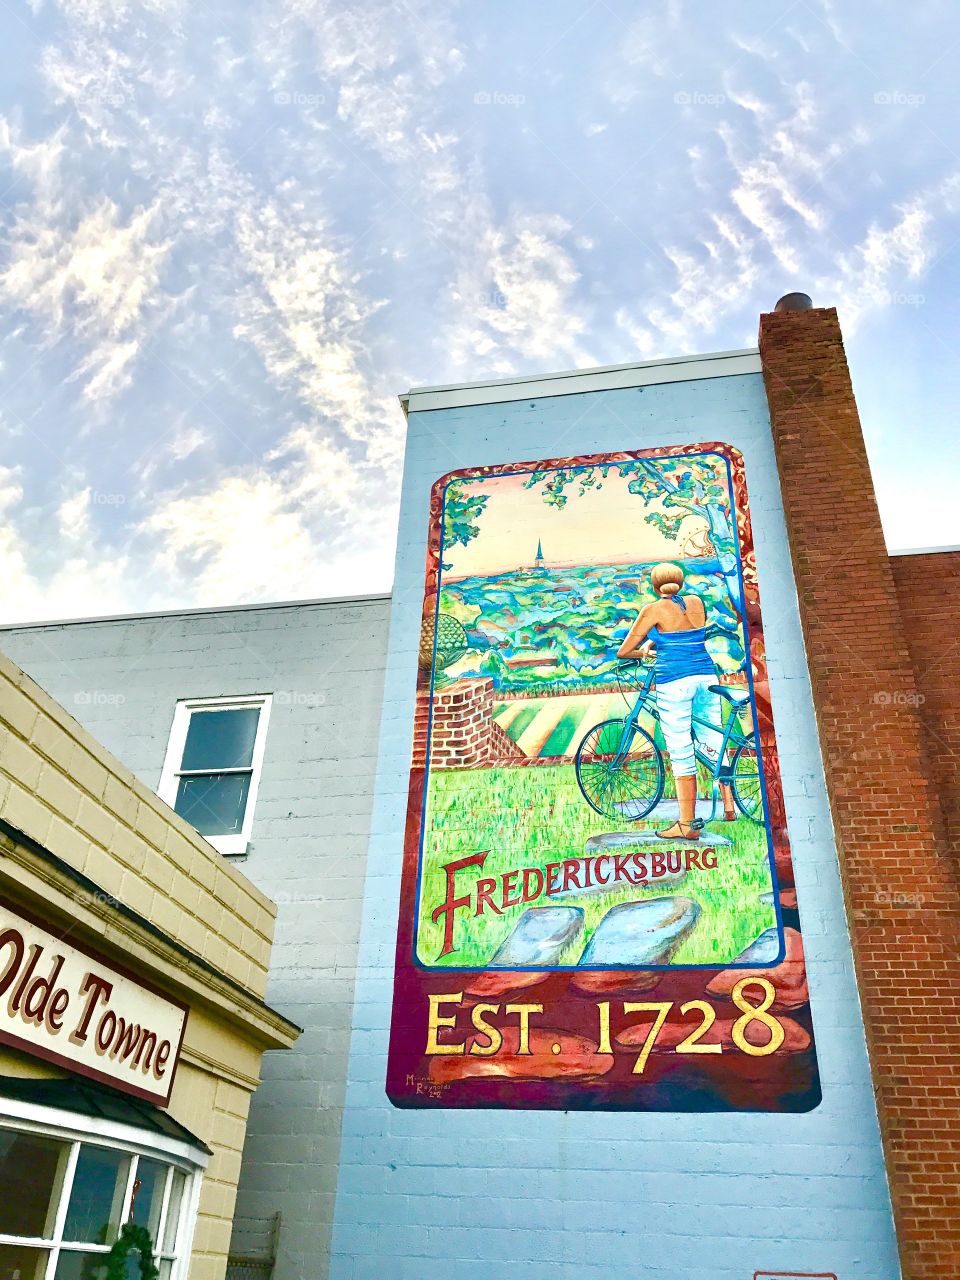 Fredericksburg Painted on Brick Building